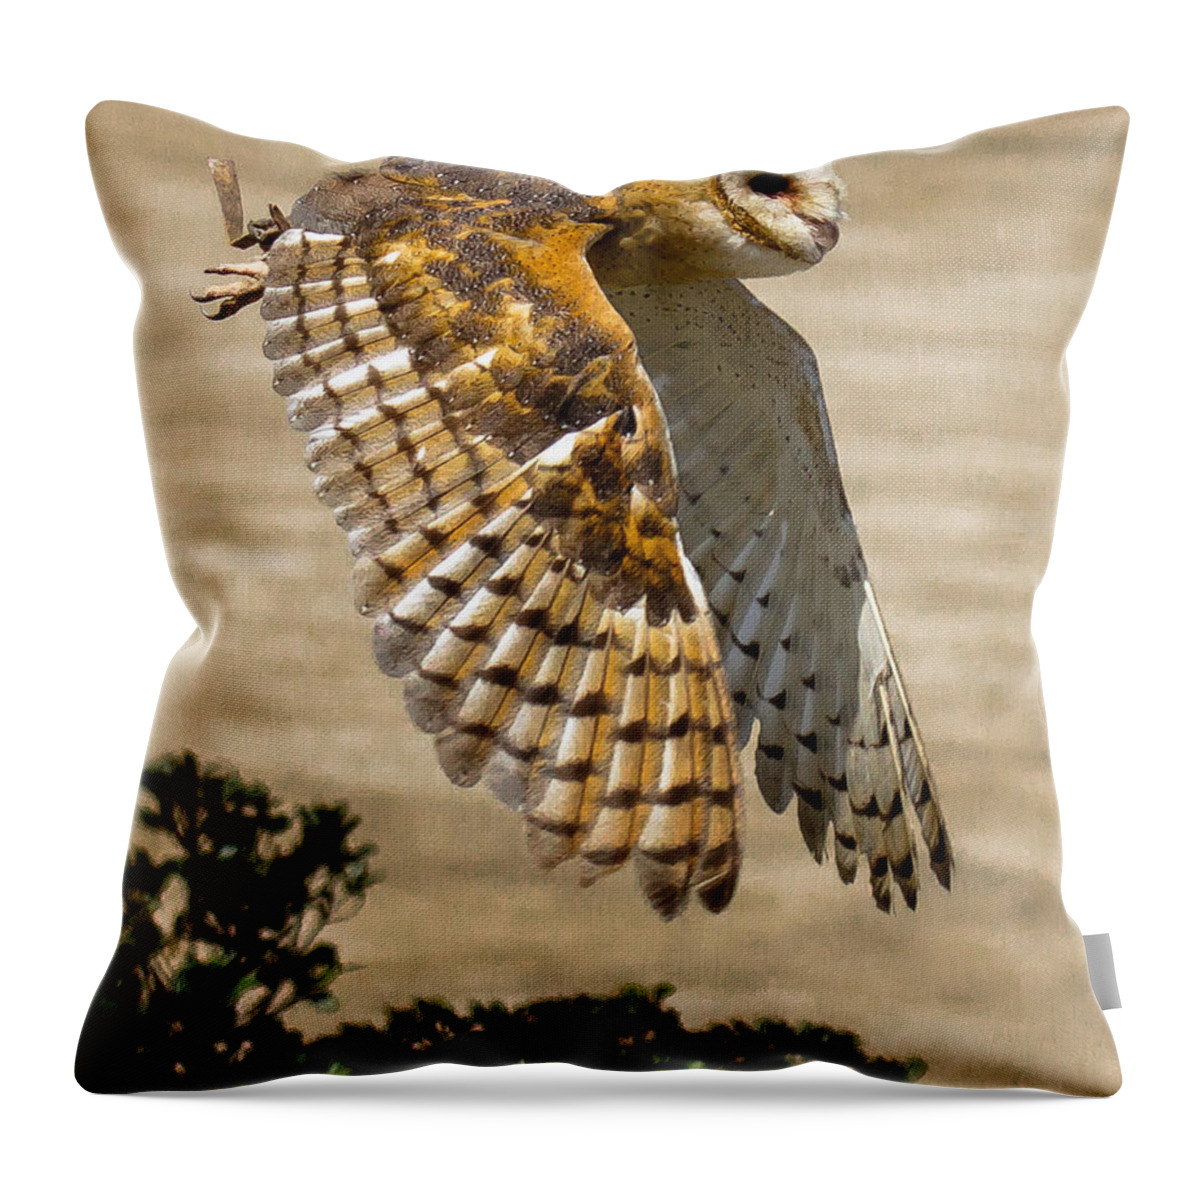 Barn Owl Throw Pillow featuring the photograph Barn Owl by Robert L Jackson